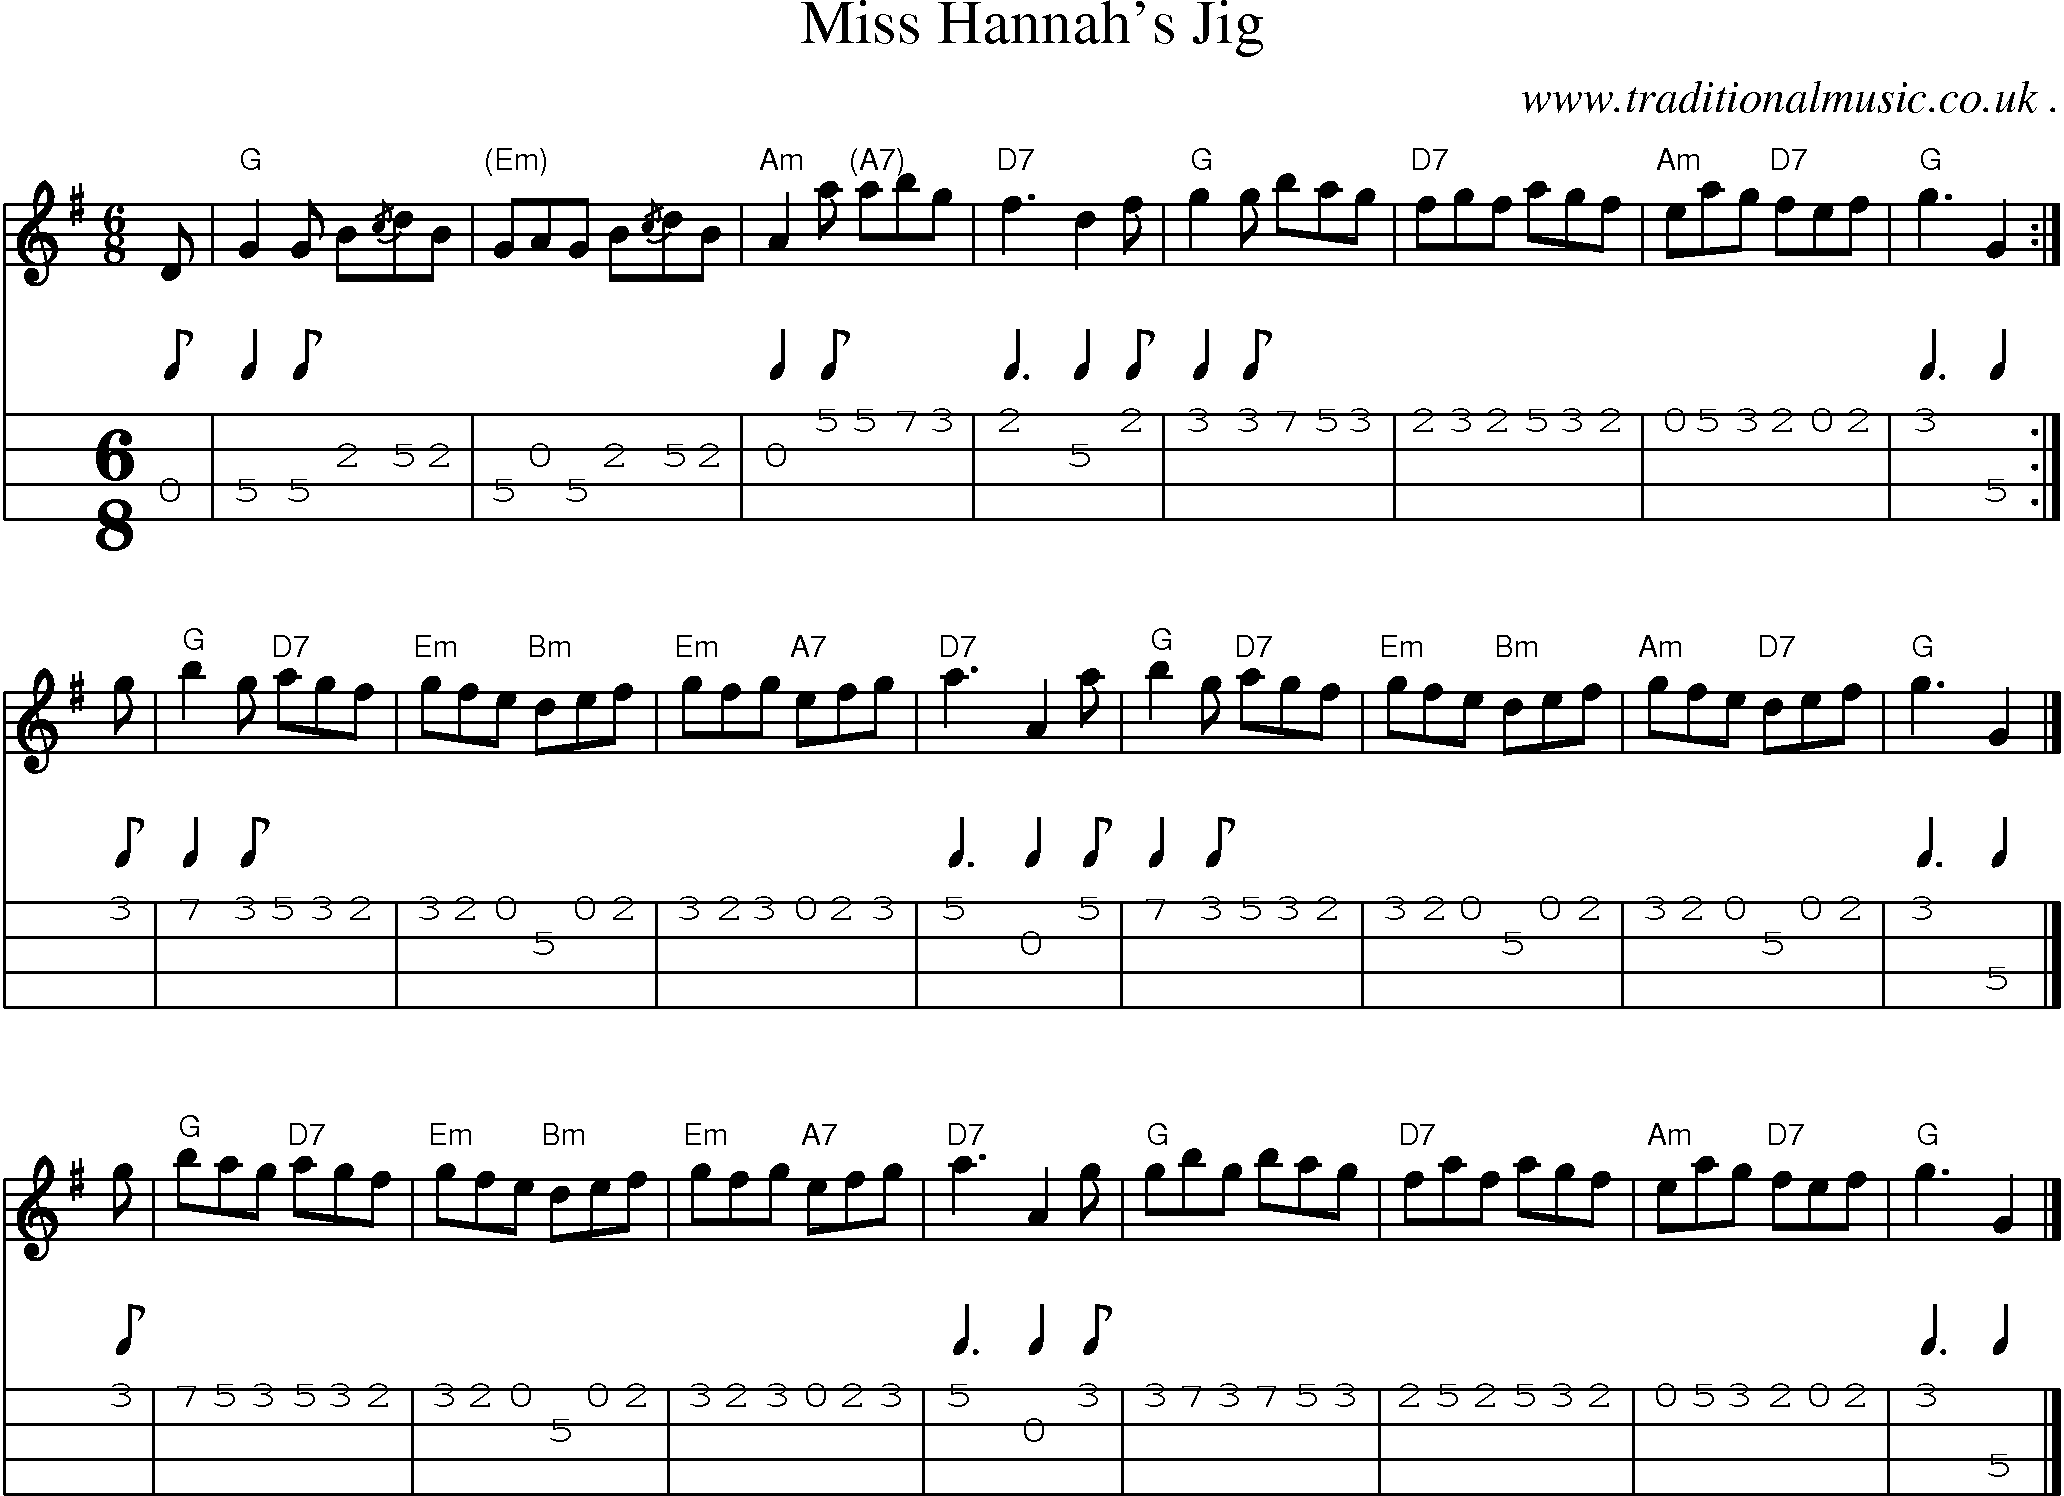 Sheet-music  score, Chords and Mandolin Tabs for Miss Hannahs Jig